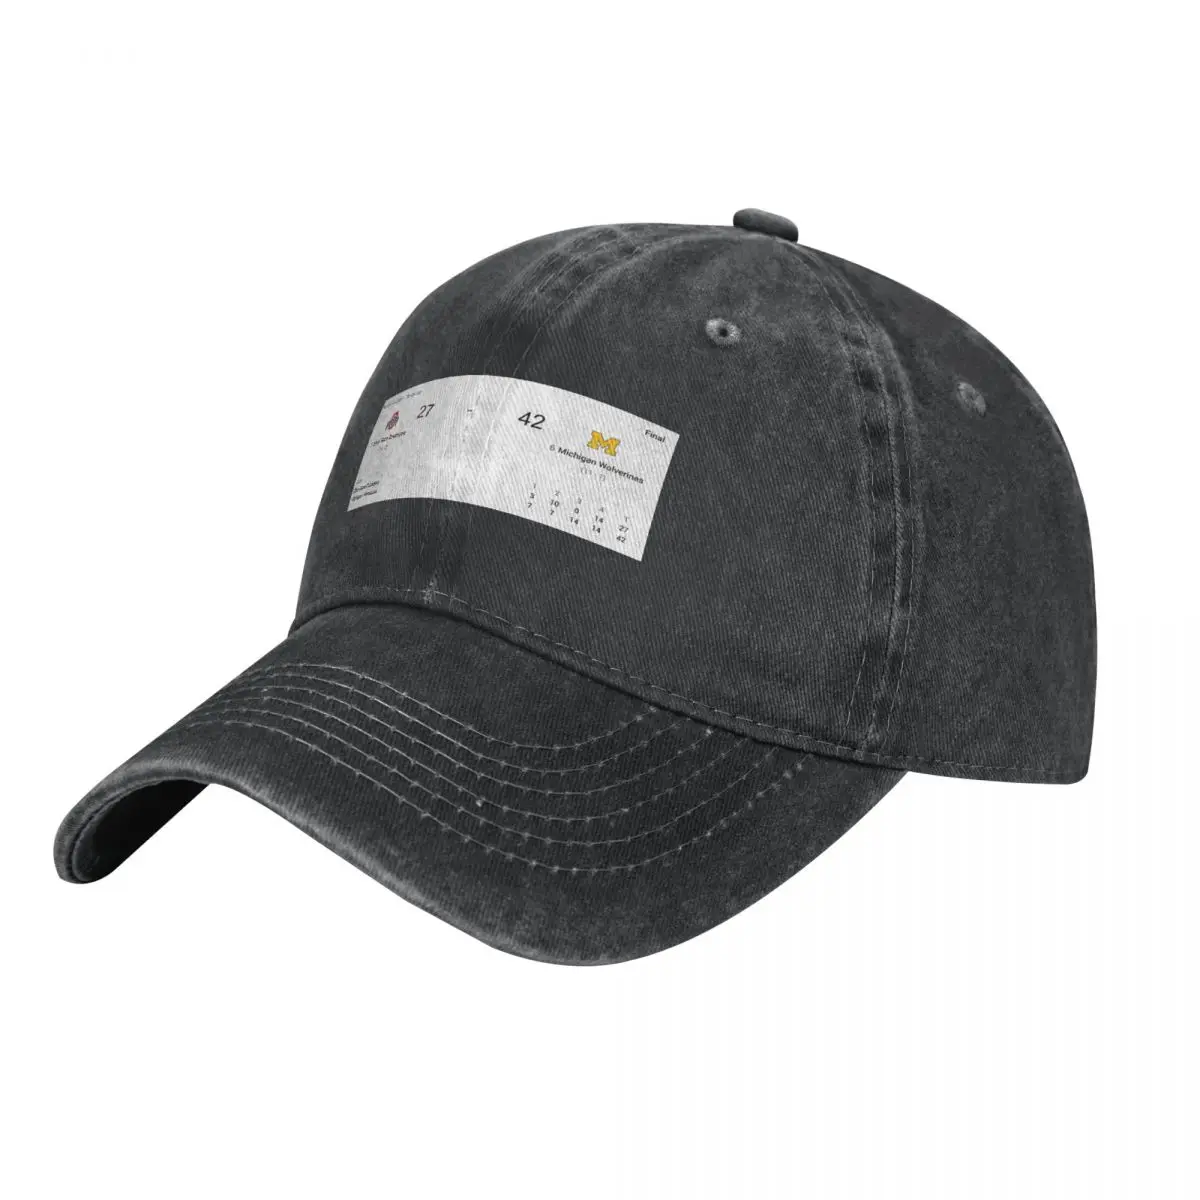 

42 - 27 Cowboy Hat Trucker Cap Golf Hat Man Horse Hat Sports Cap Hats Man Women's